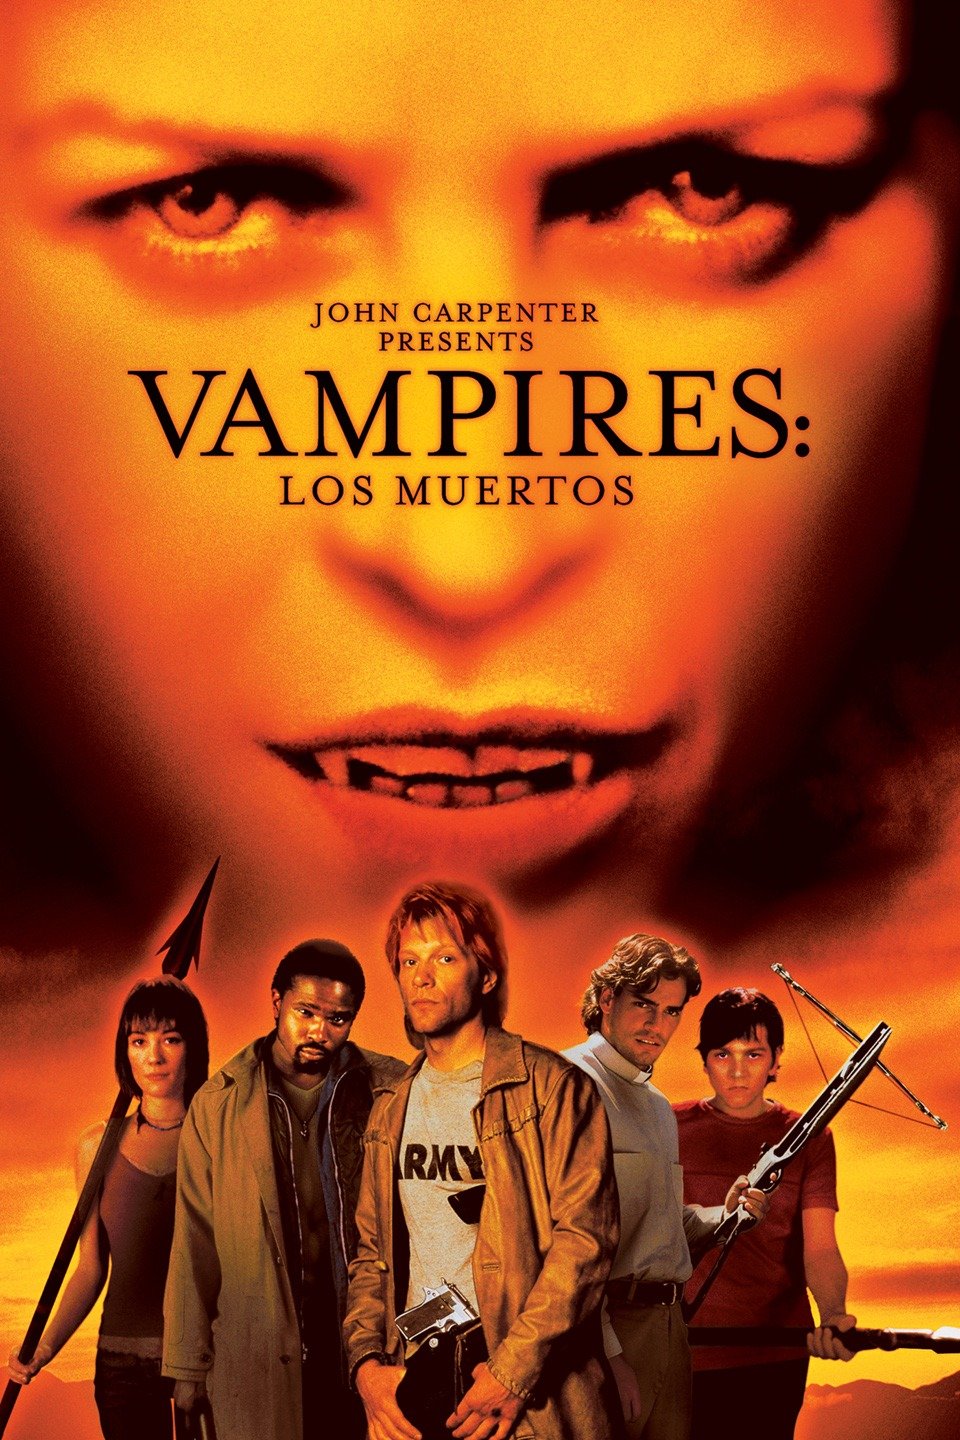 My Best Friend's A Vampire Full Movie Free Online